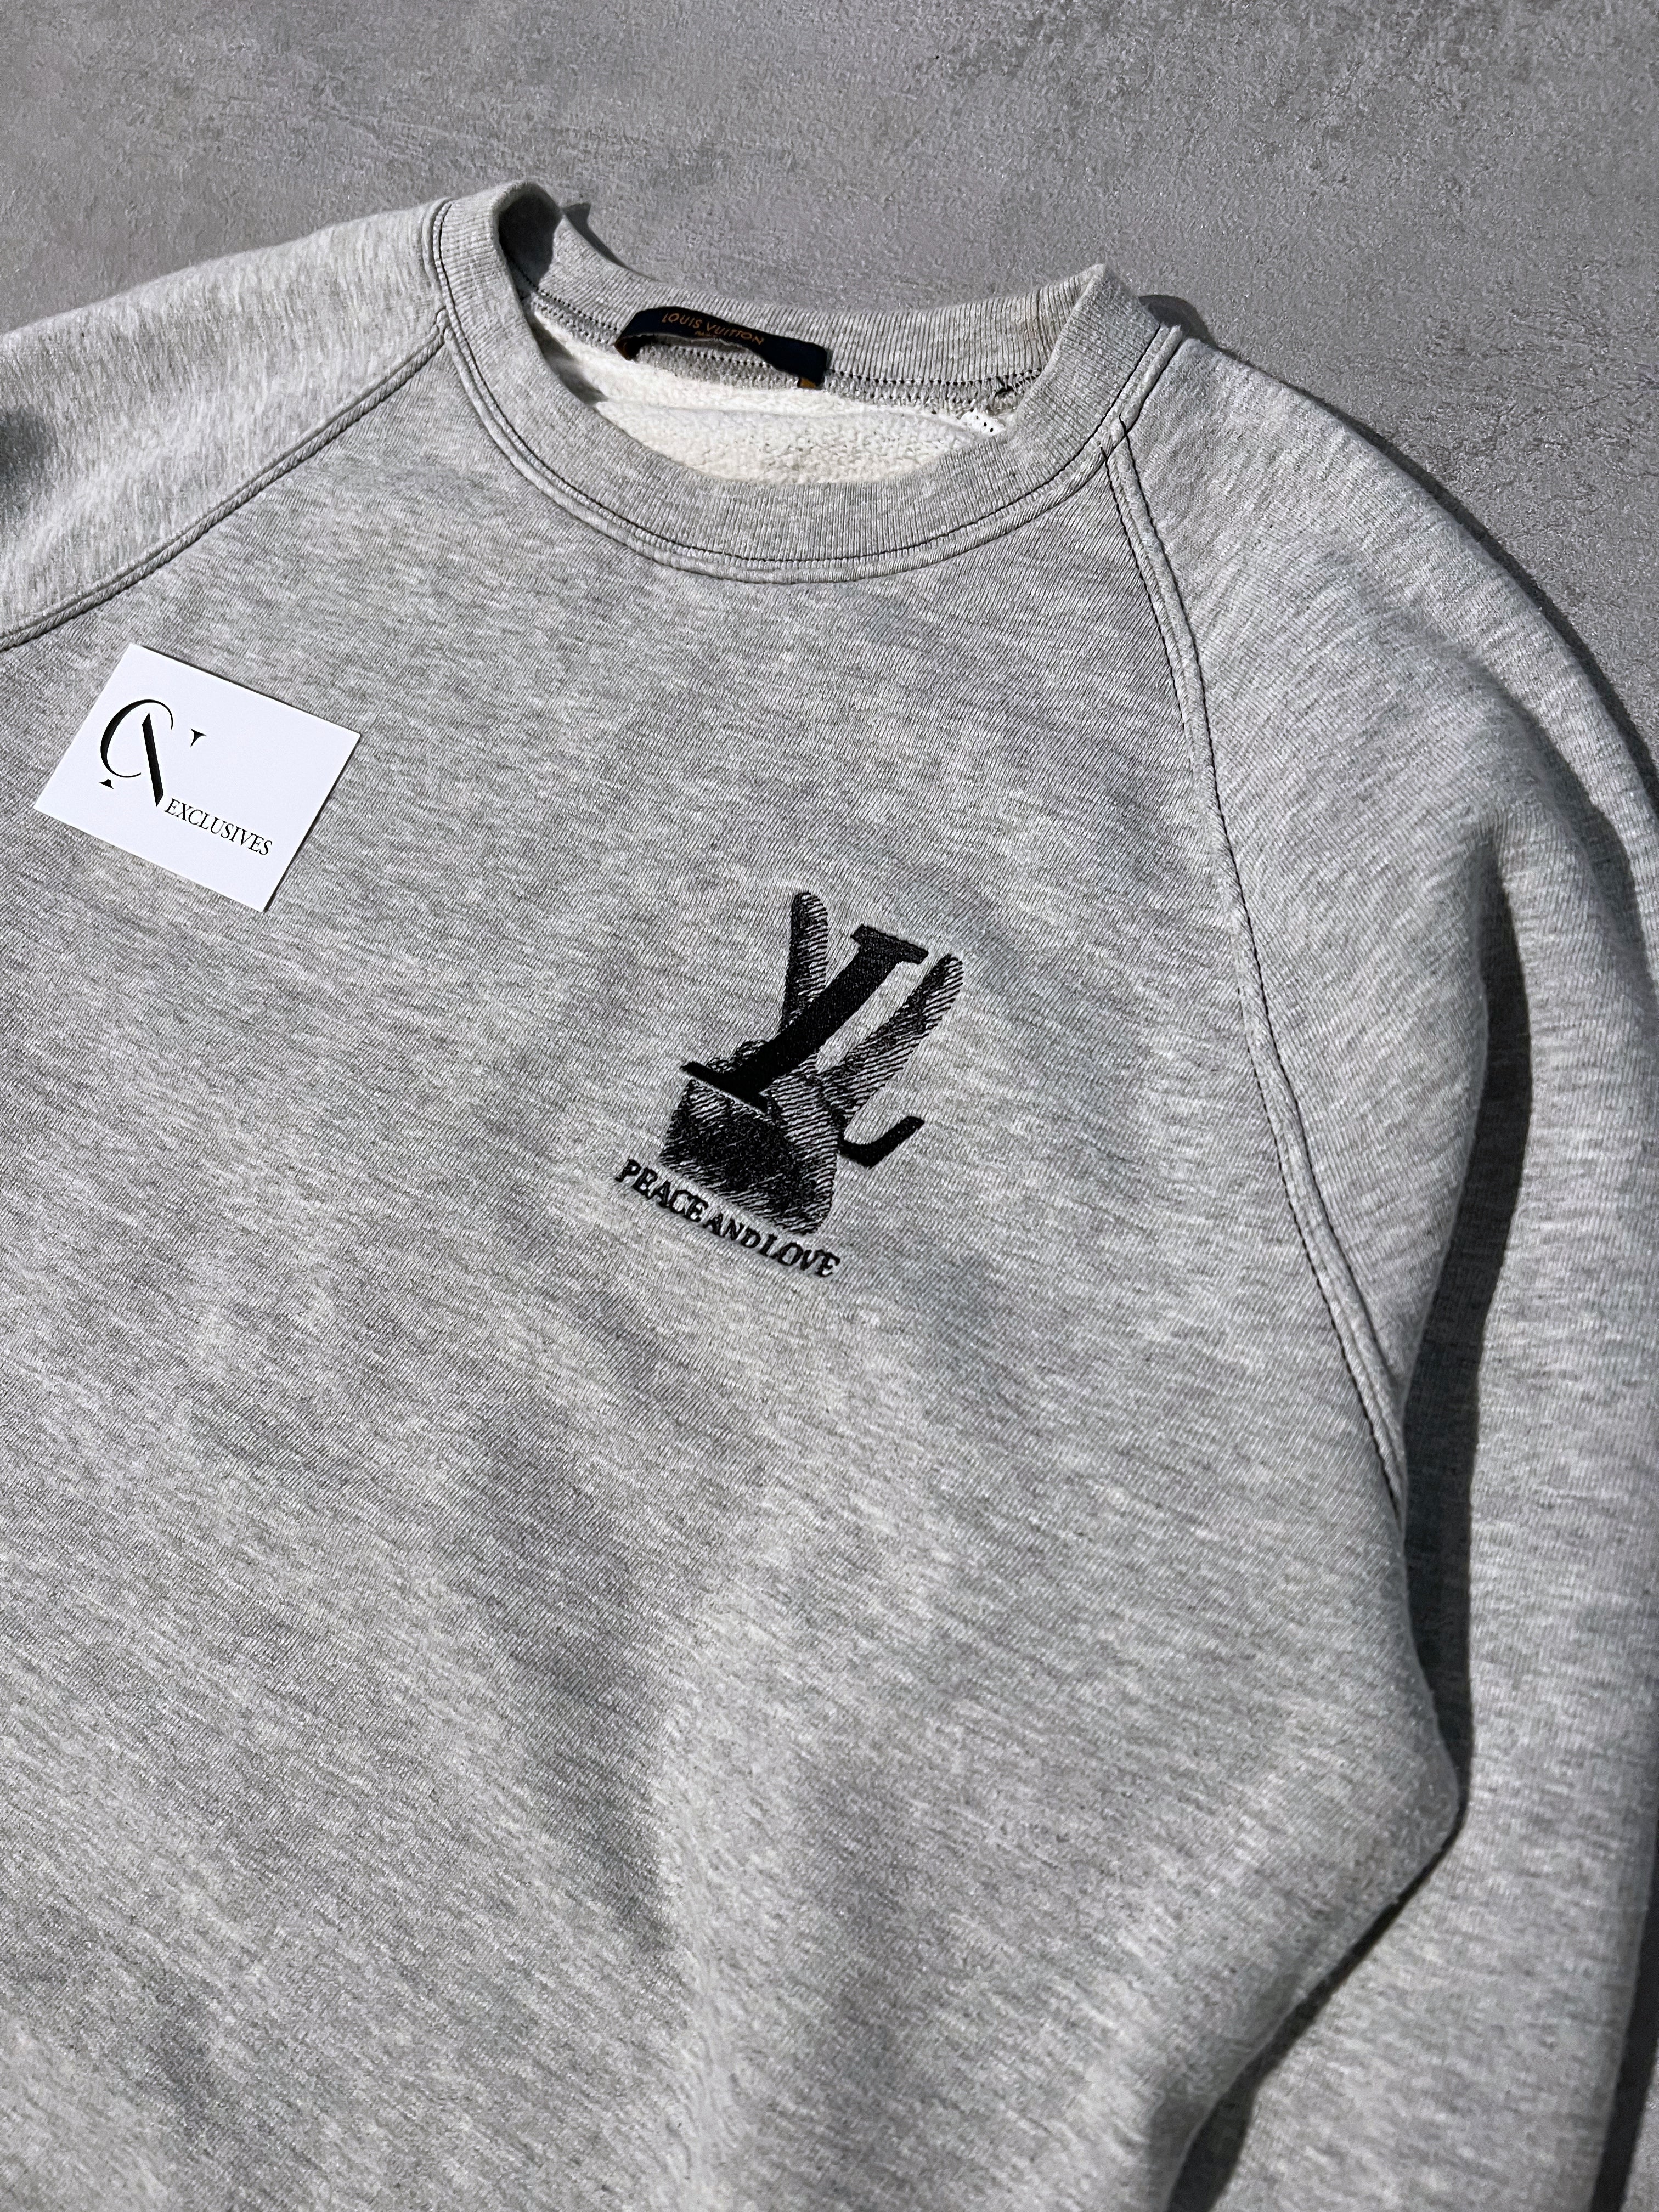 Louis Vuitton peace and love sweater sz M – Ventura